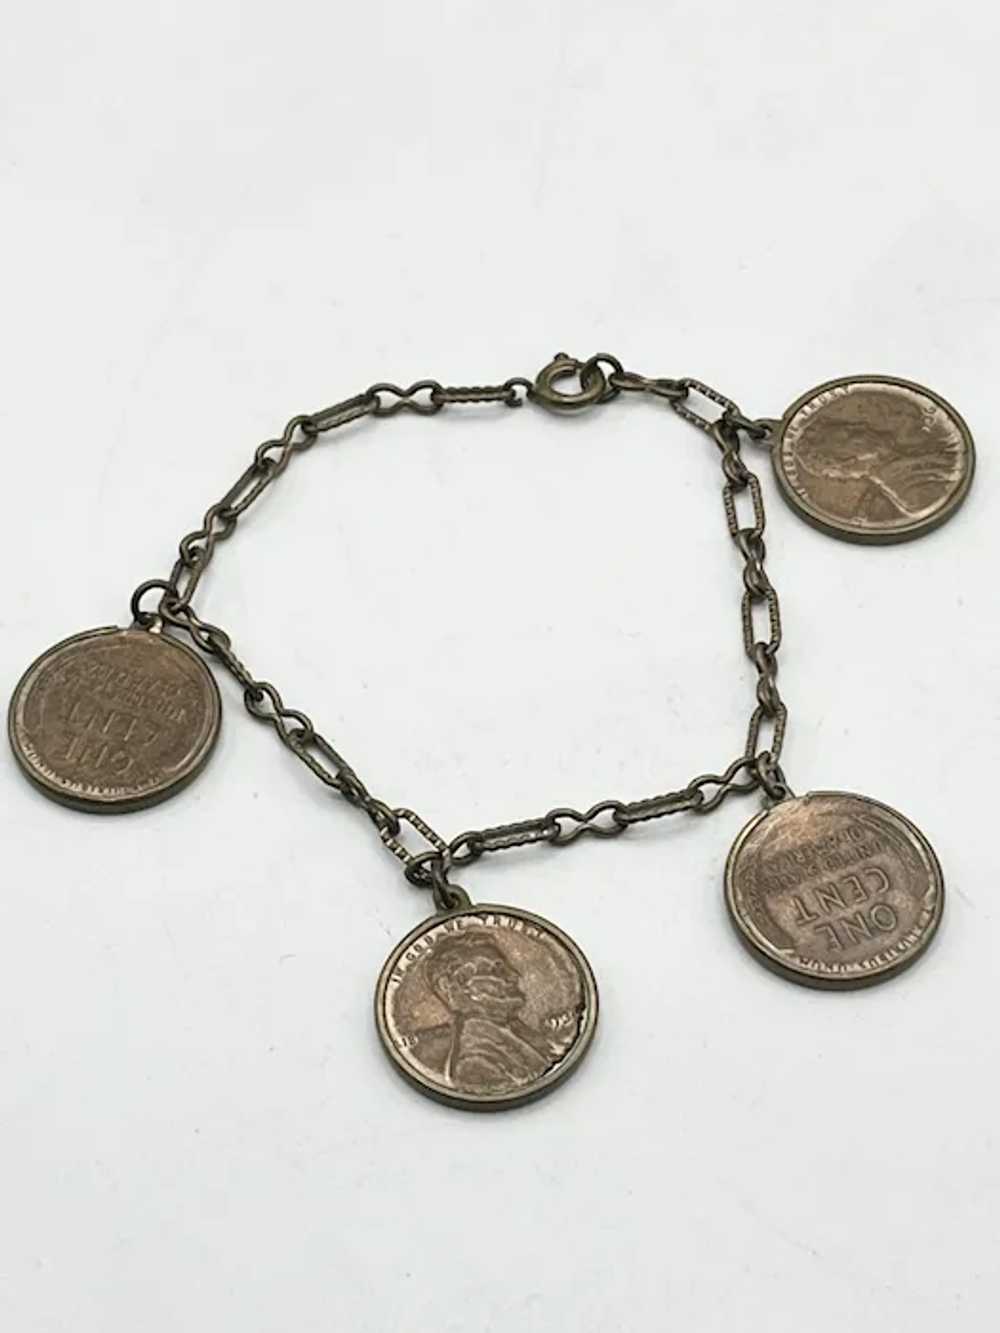 Vintage one cent penny coin charm bracelet - image 4